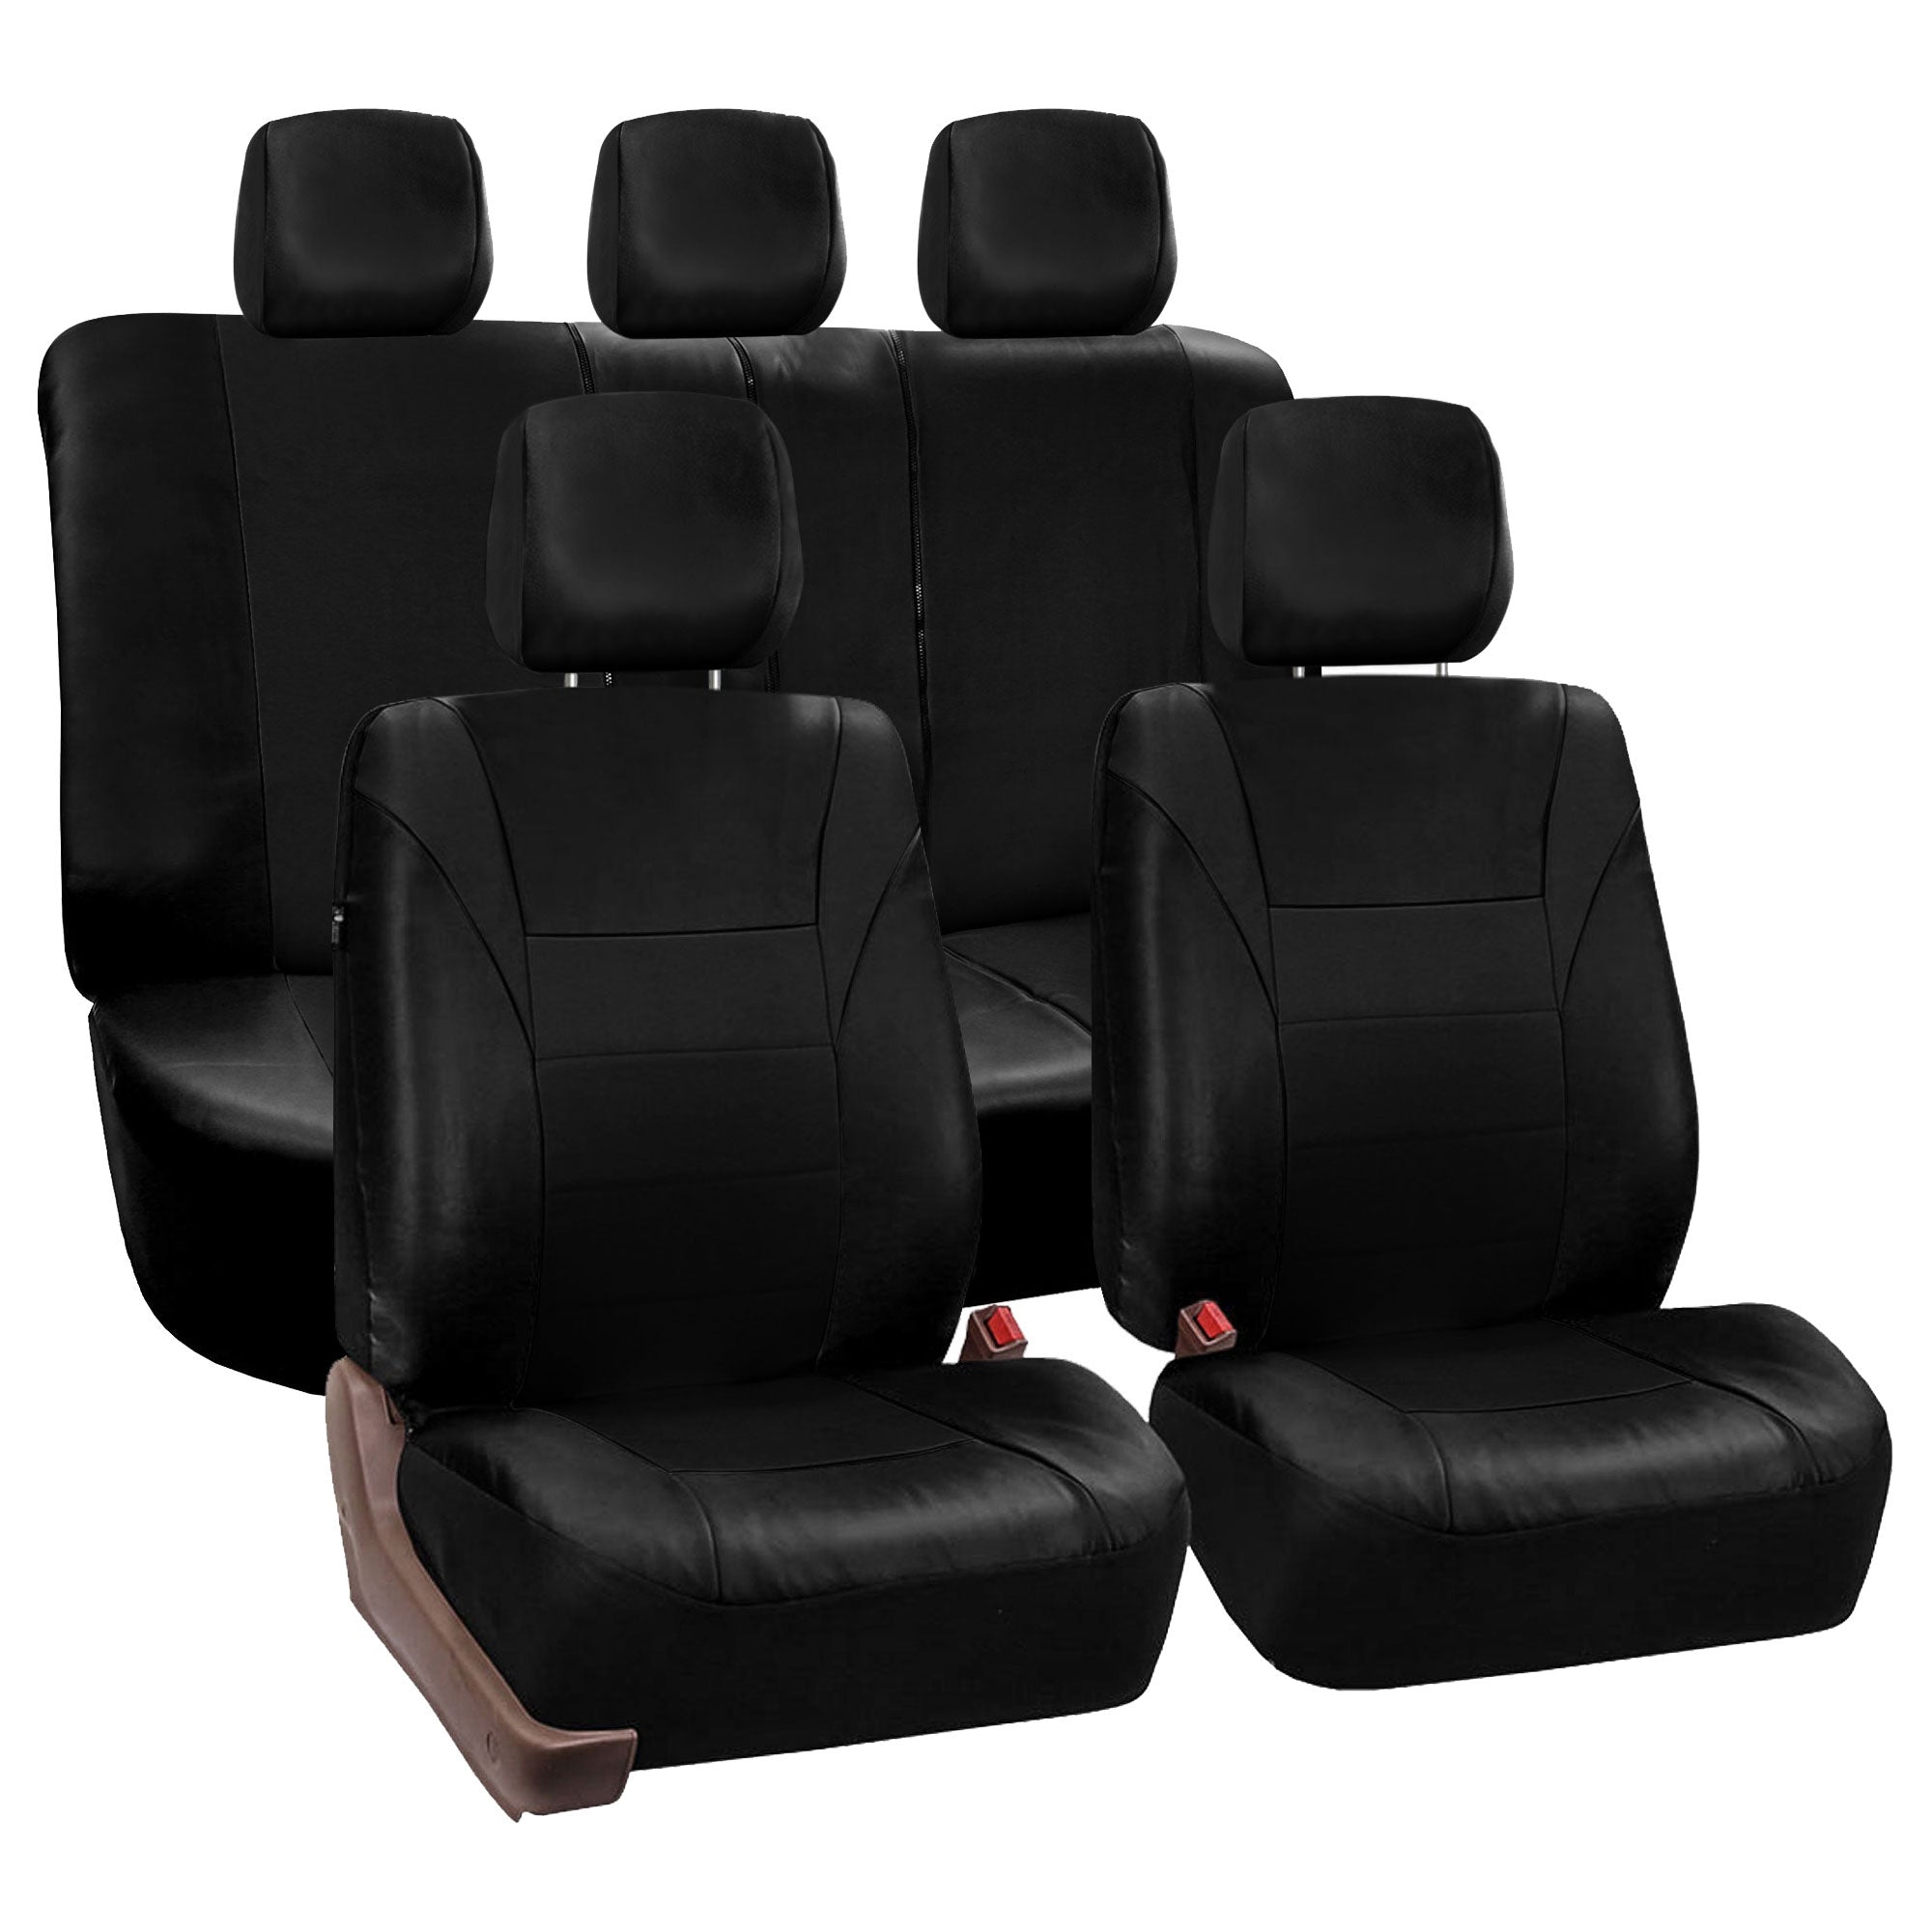 Racing PU Leather Seat Covers - Full Set Black